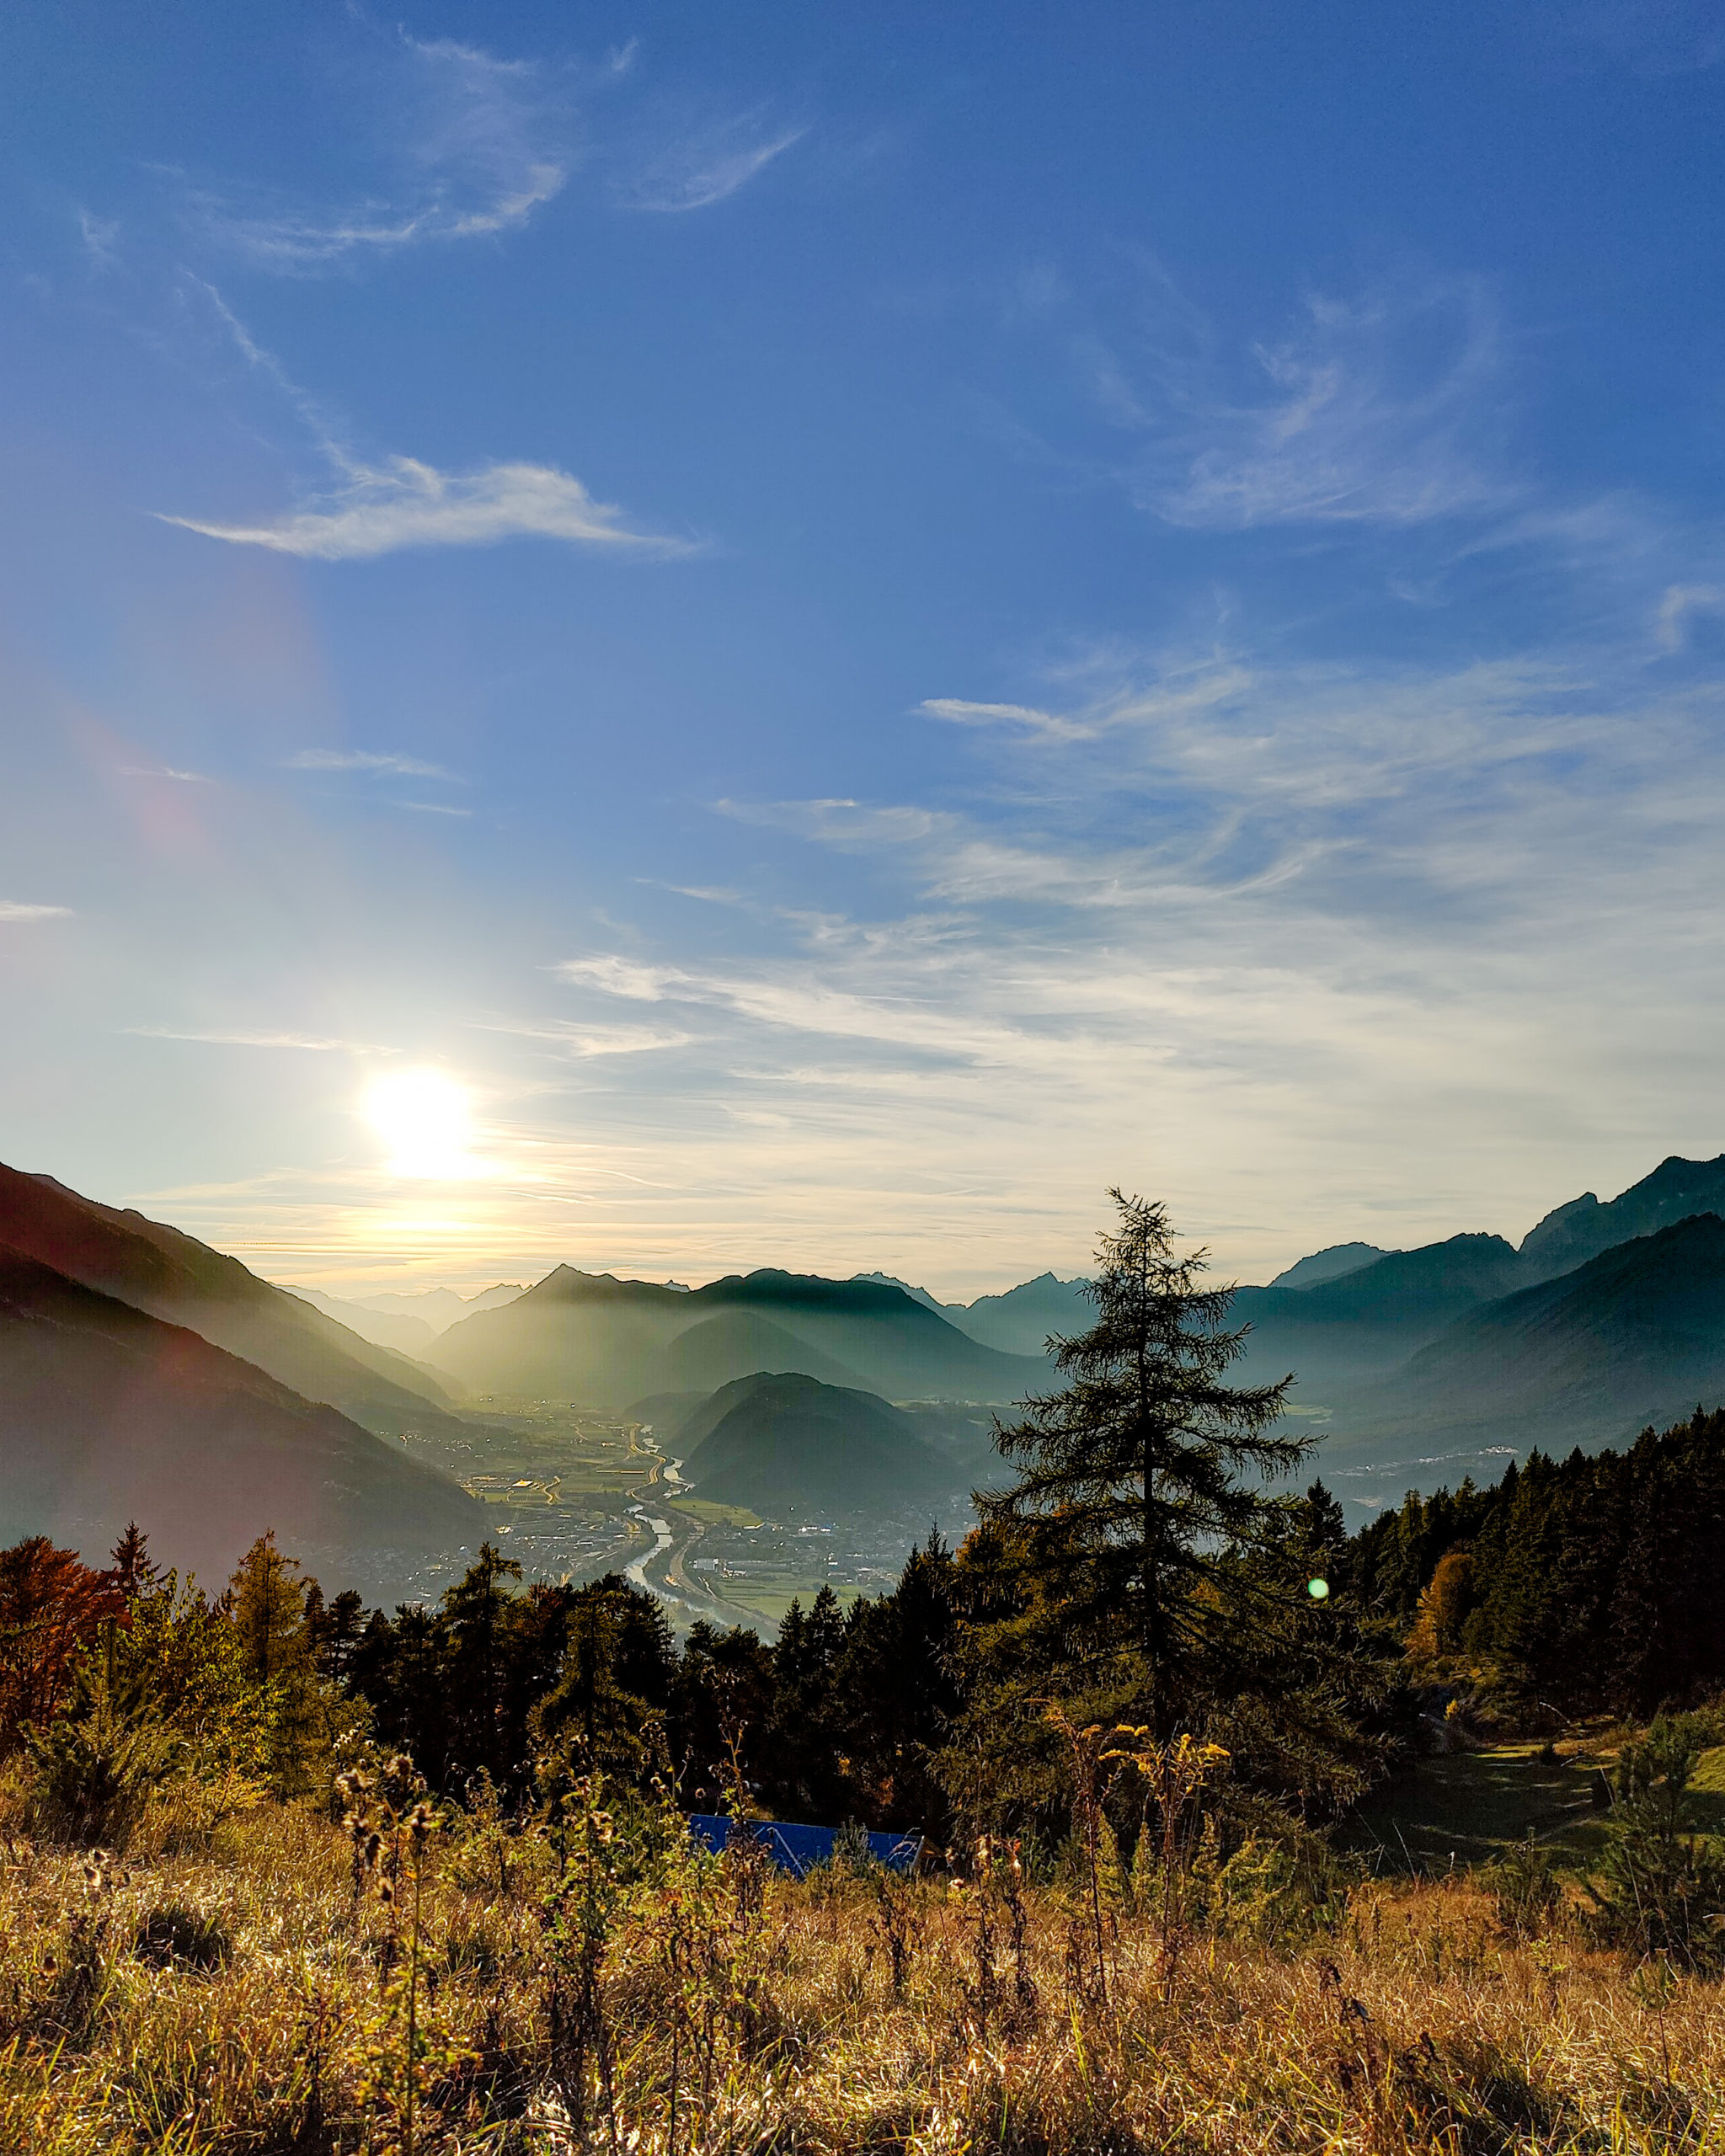 Du betrachtest gerade Herbst 2022 – Alpen … und Meer